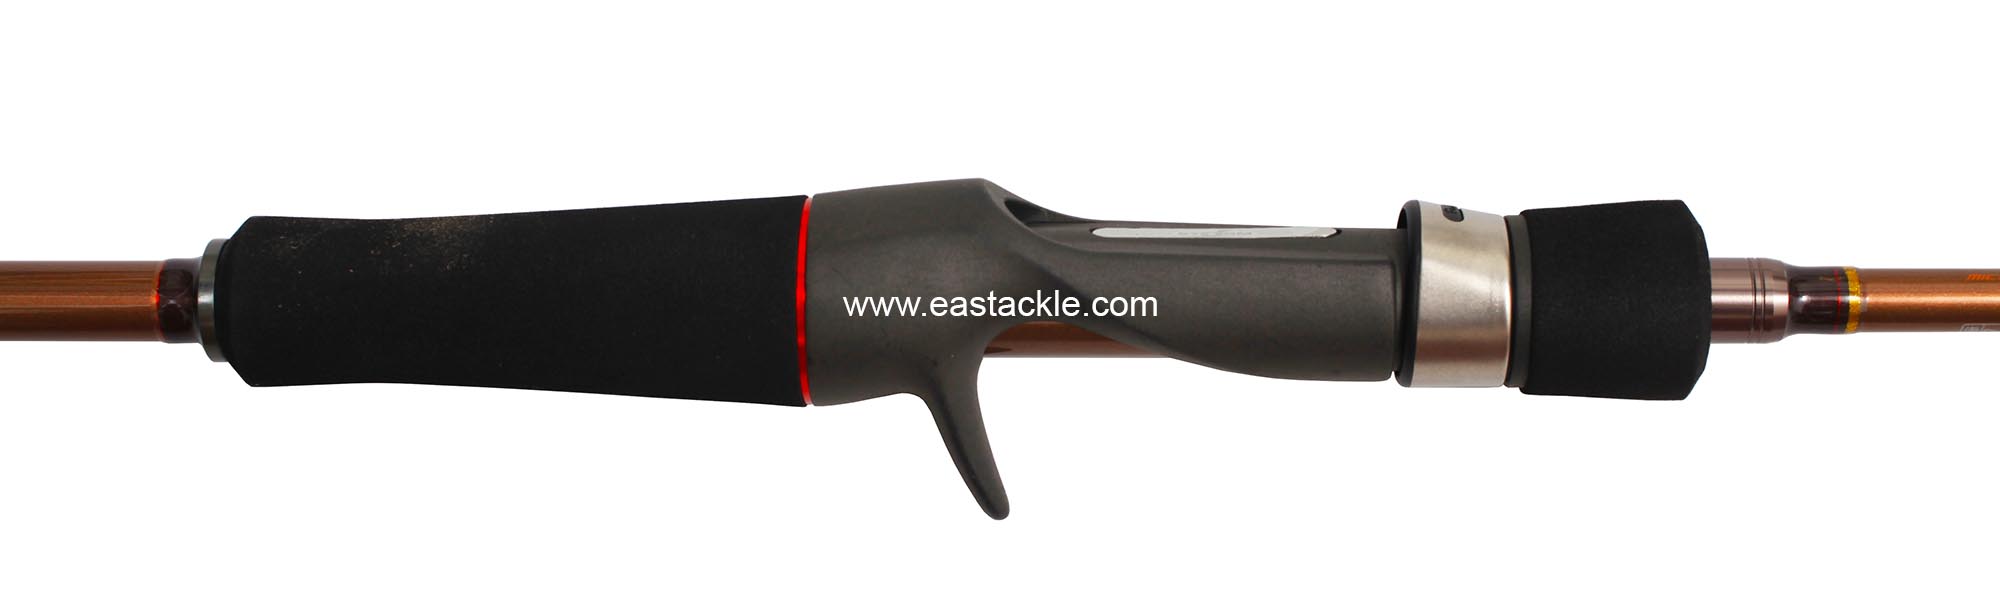 Storm - Teenie - TNC642UL - Bait Casting Rod - Reel Seat (Side View) | Eastackle